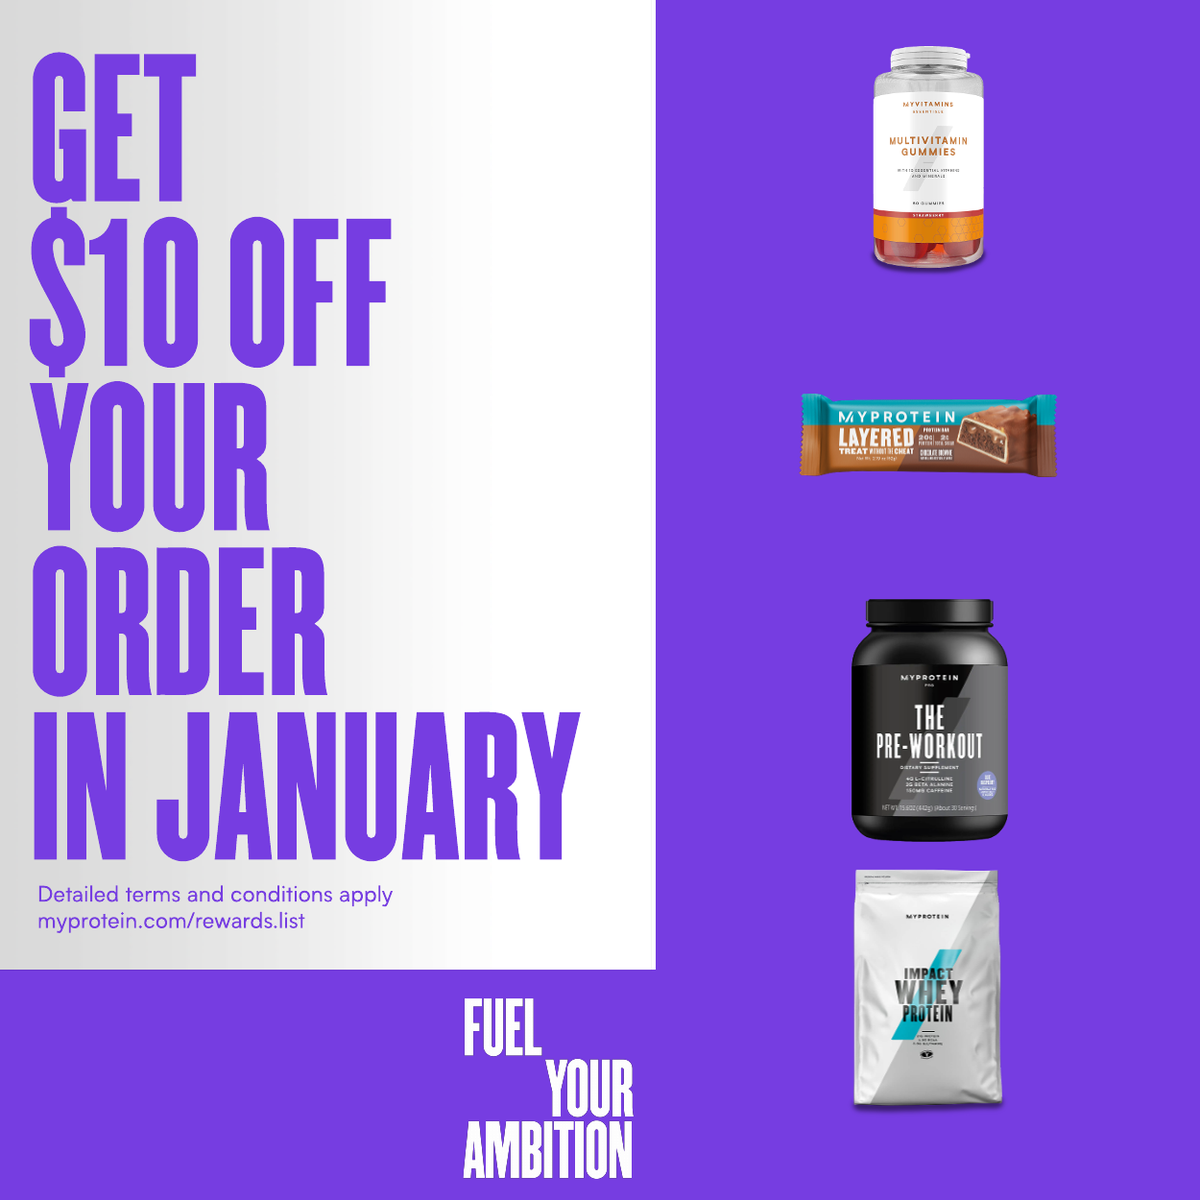 January offers